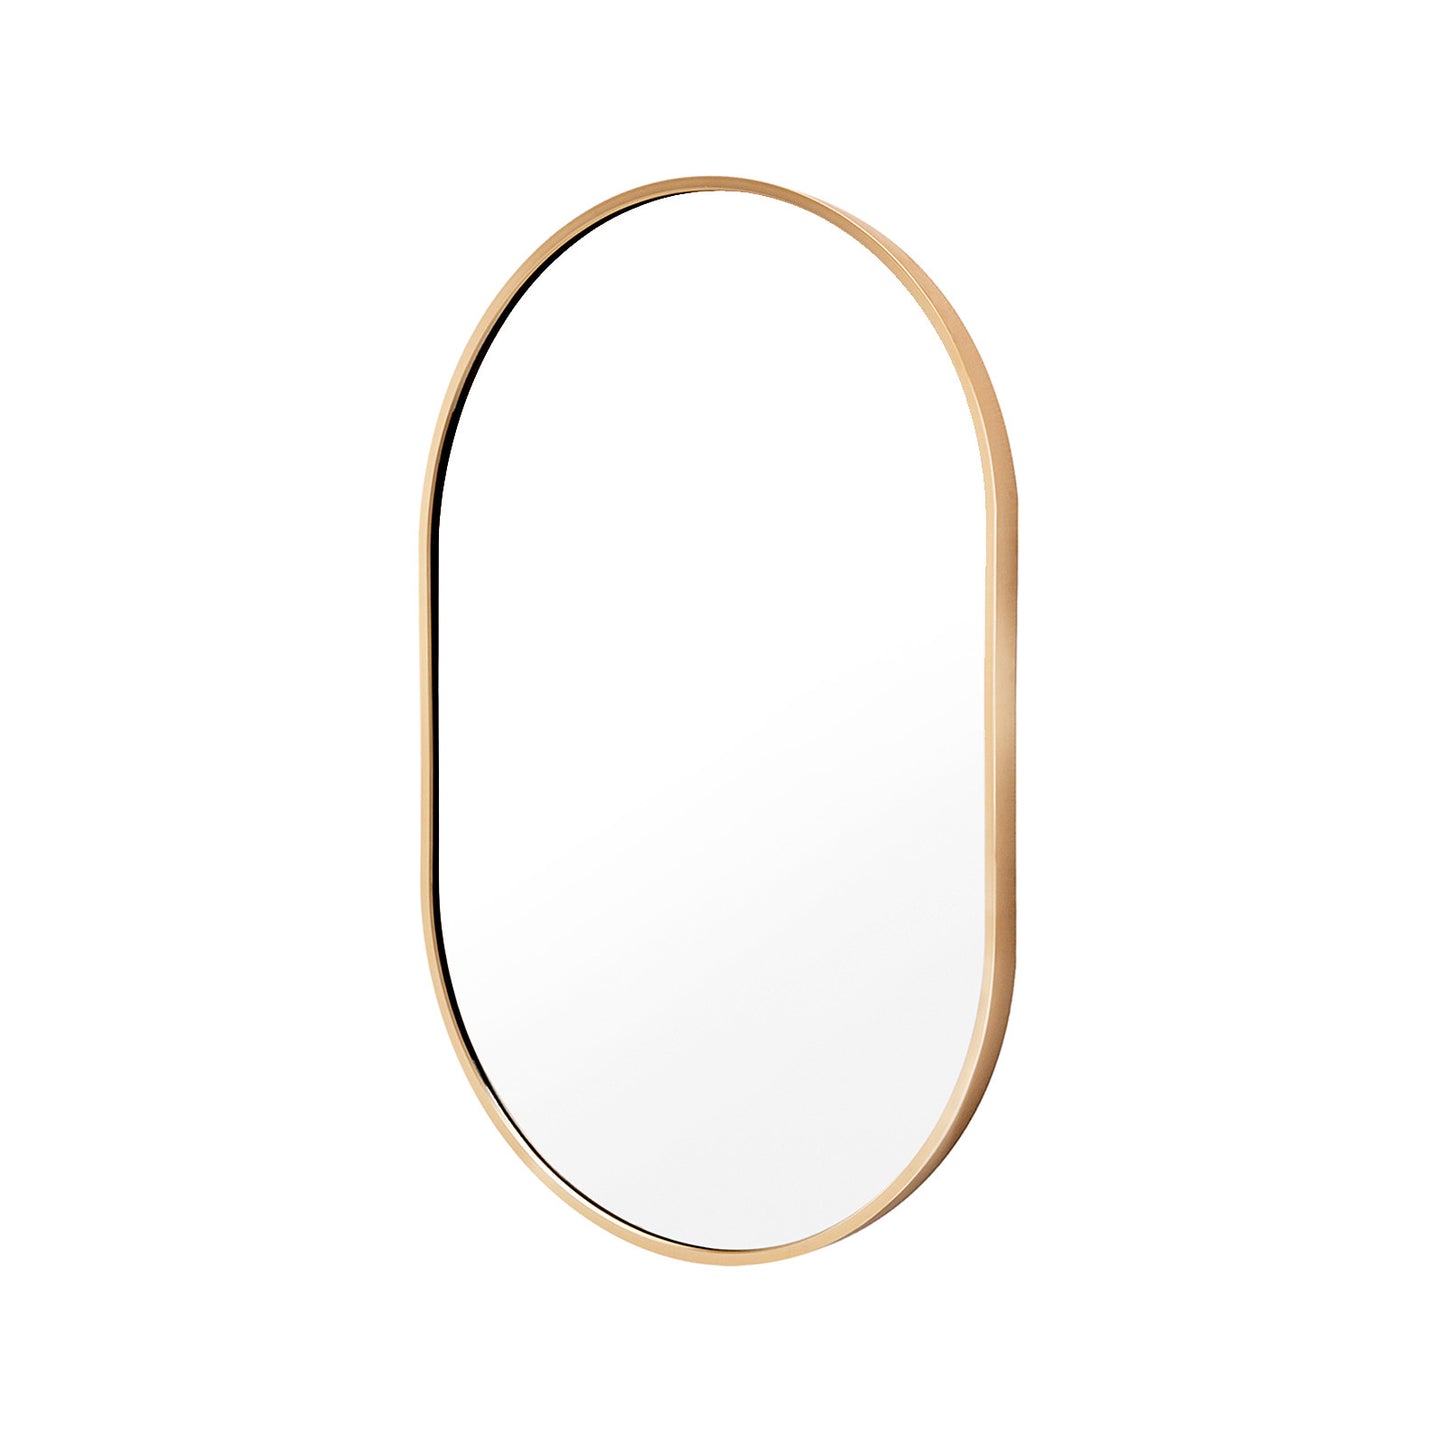 Gold Wall Mirror Oval Aluminum Frame Makeup Decor Bathroom Vanity 50 x 75cm - image1